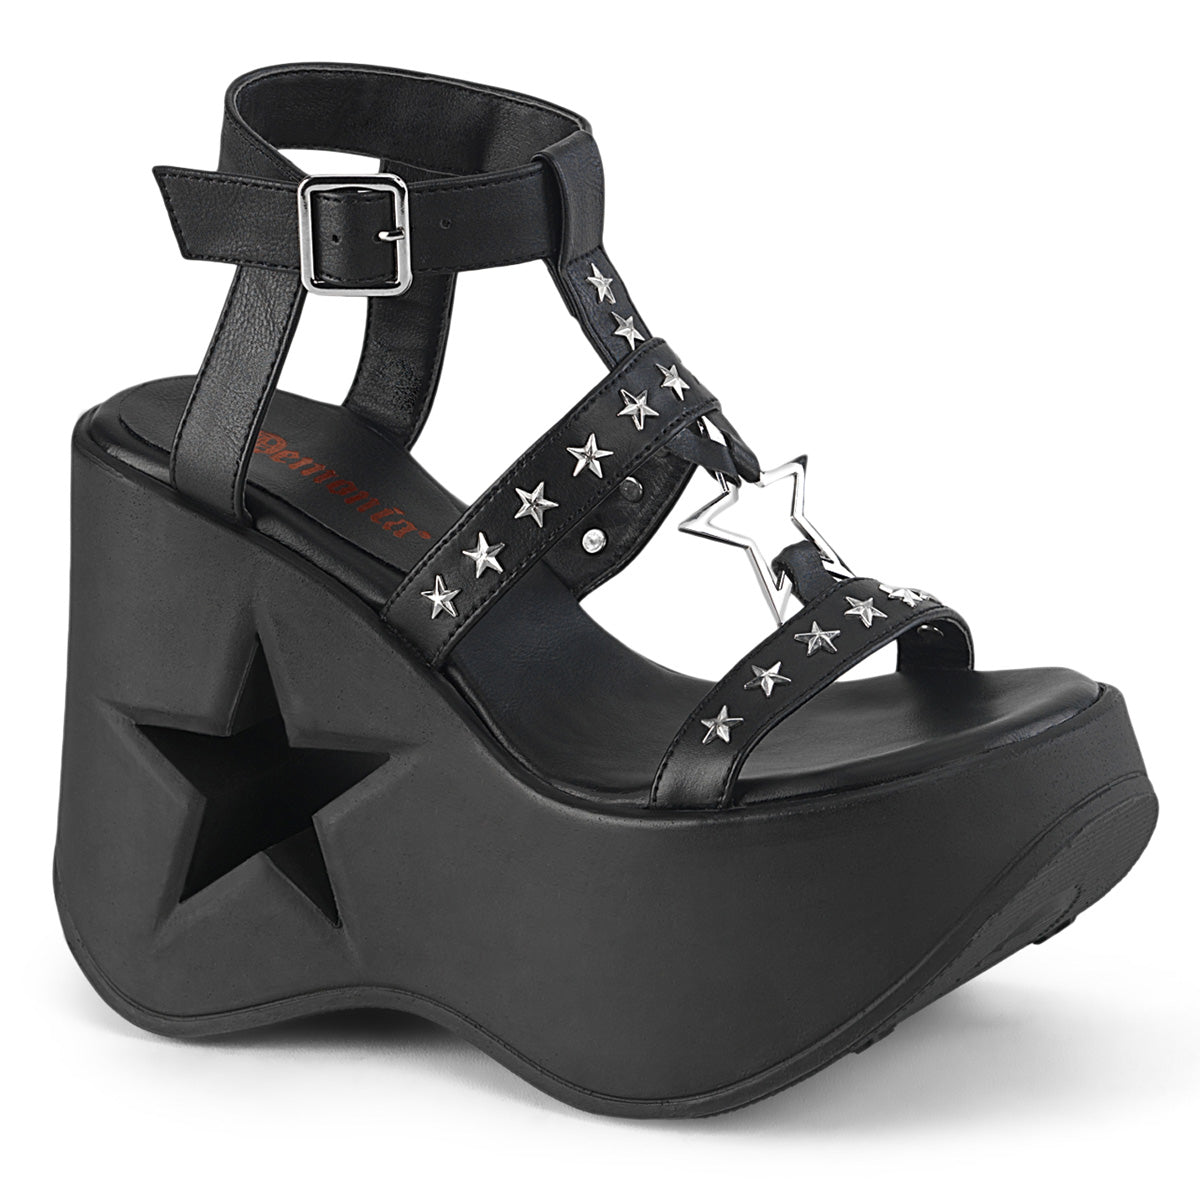 DYNAMITE-12 Alternative Footwear Demonia Women's Sandals Blk Vegan Leather